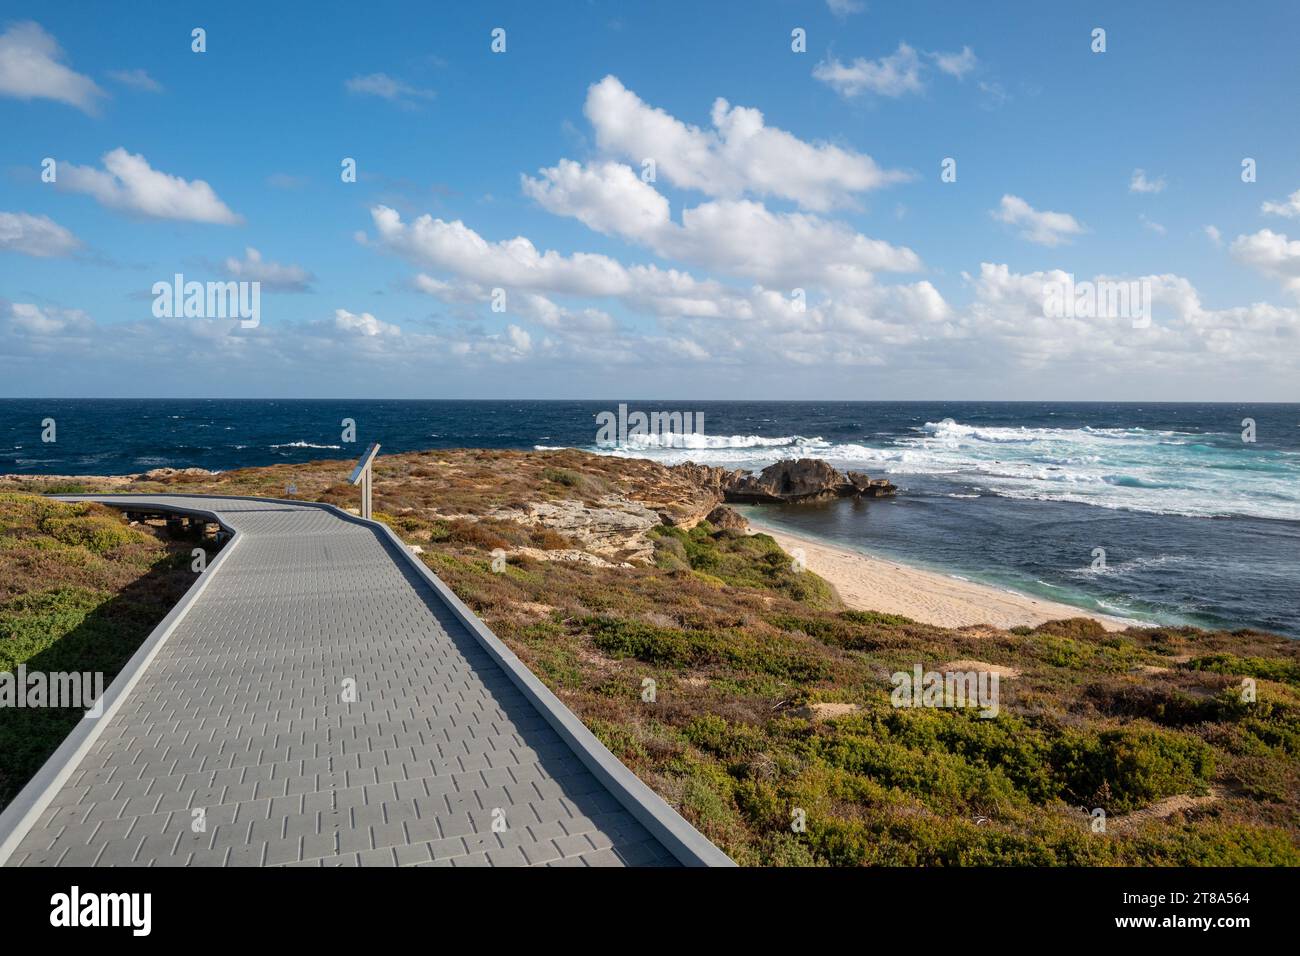 Boardwalk at West End, Rottnest Island, Western Australia Stock Photo